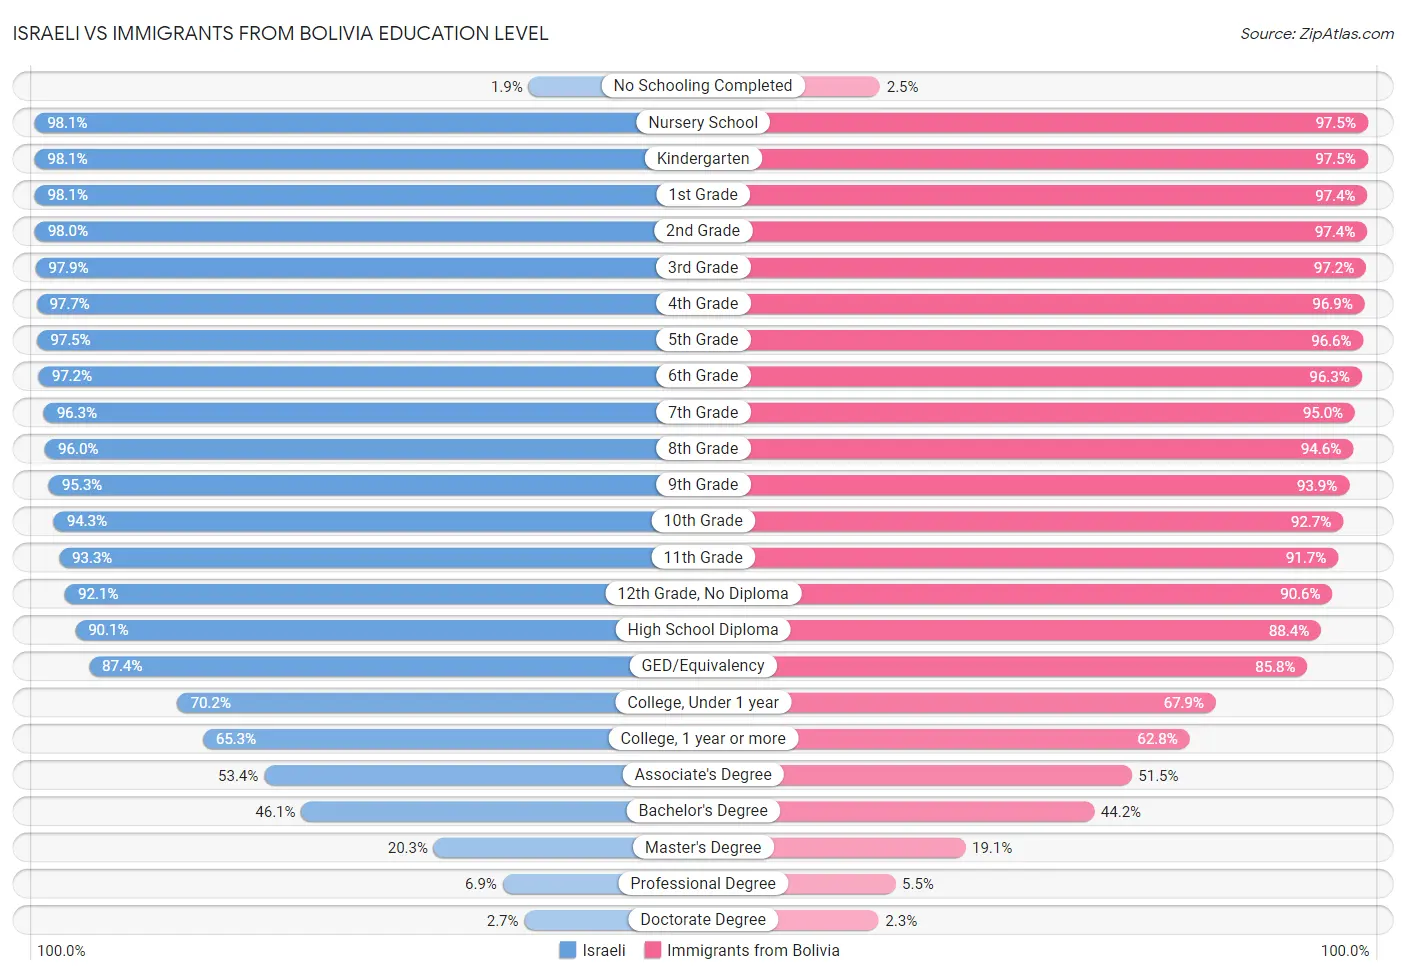 Israeli vs Immigrants from Bolivia Education Level